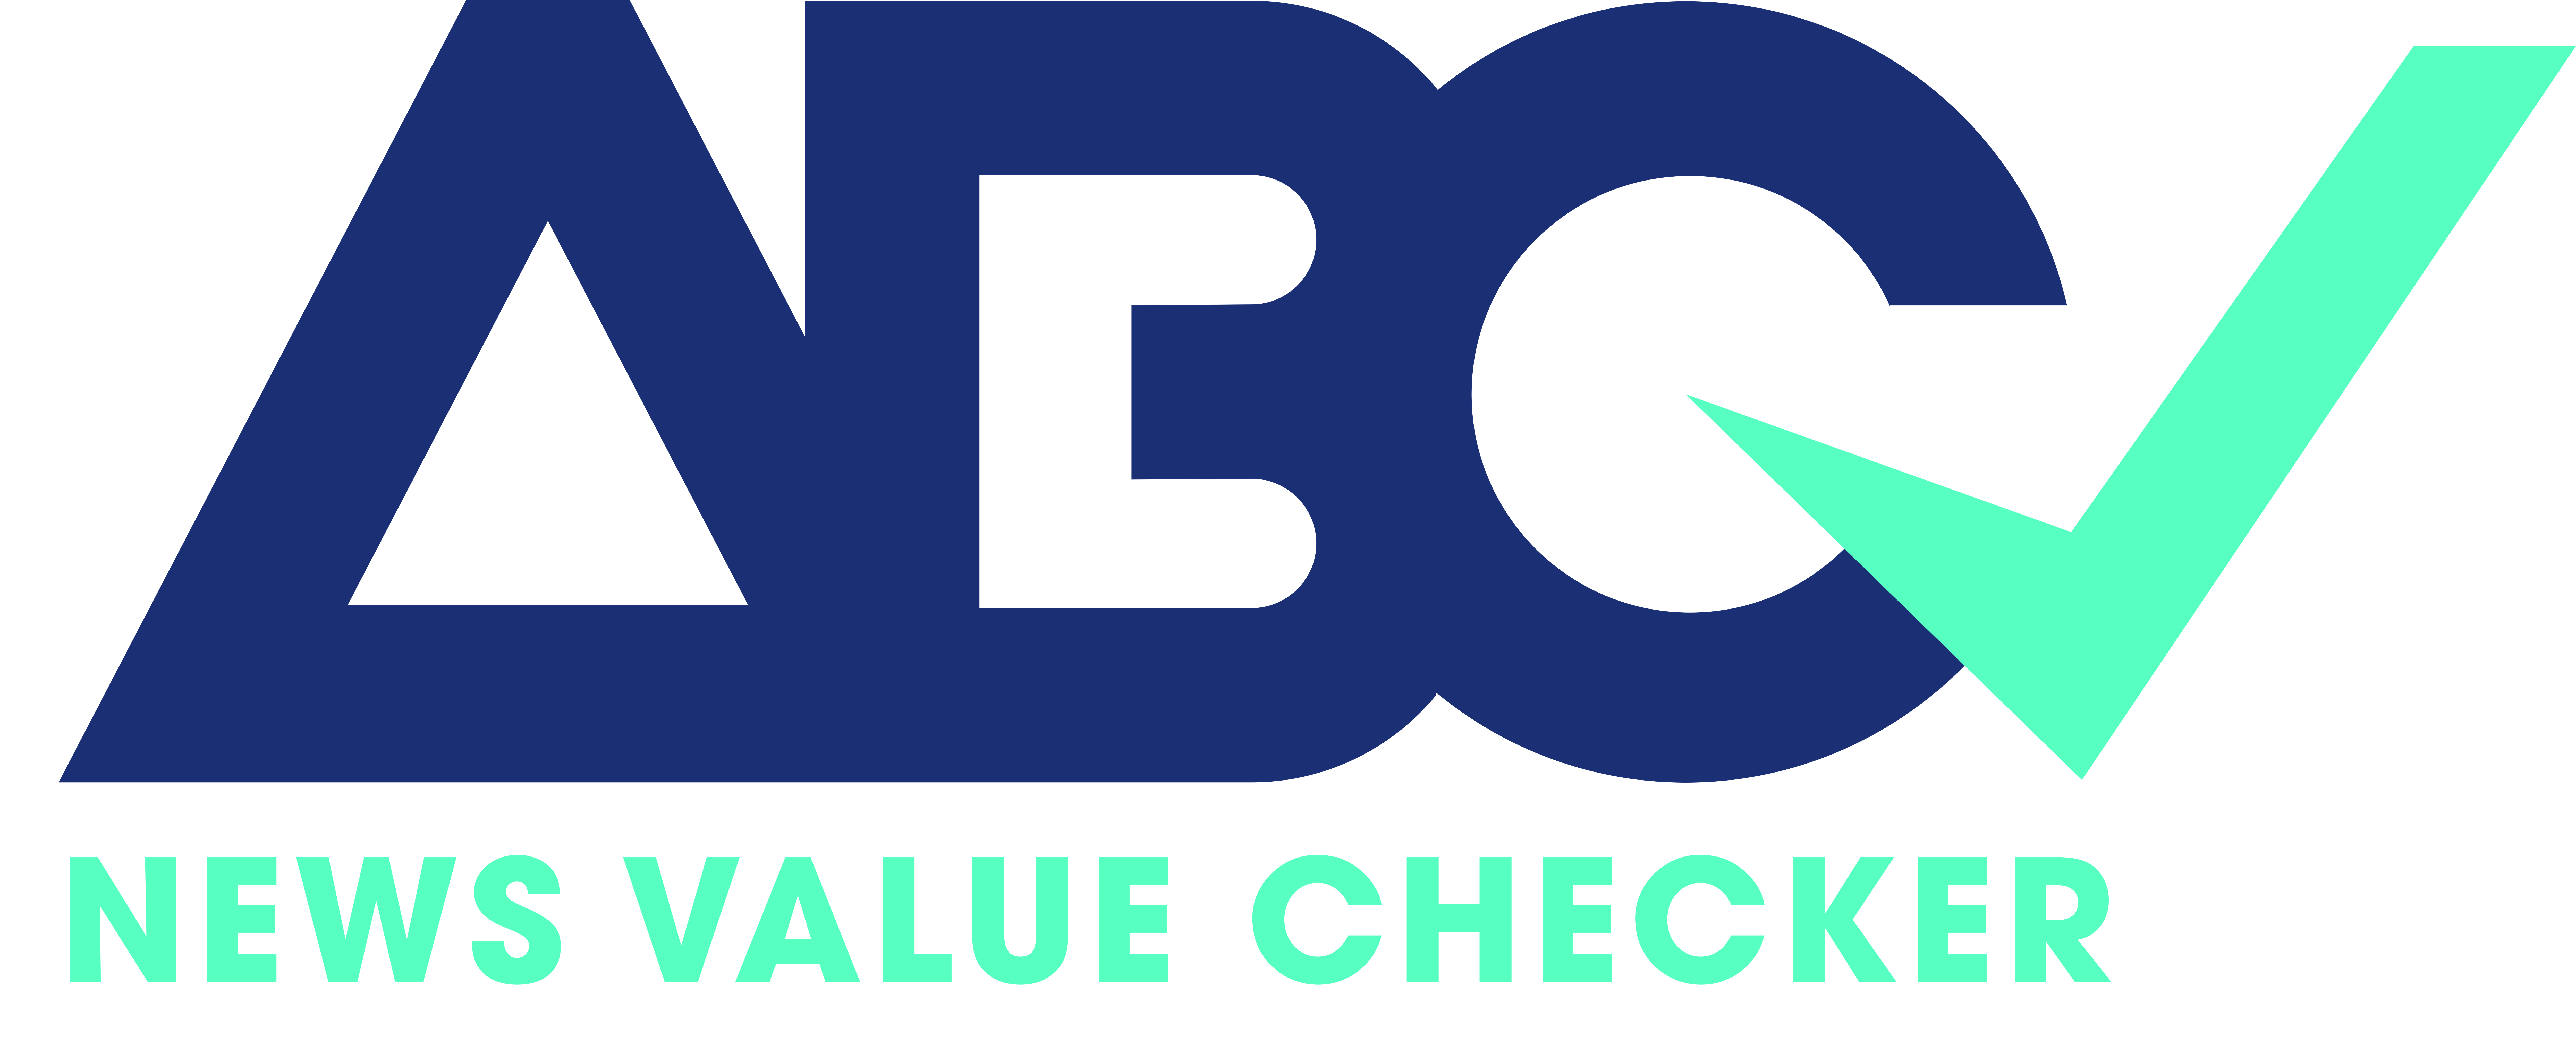 ABC News Value Checker